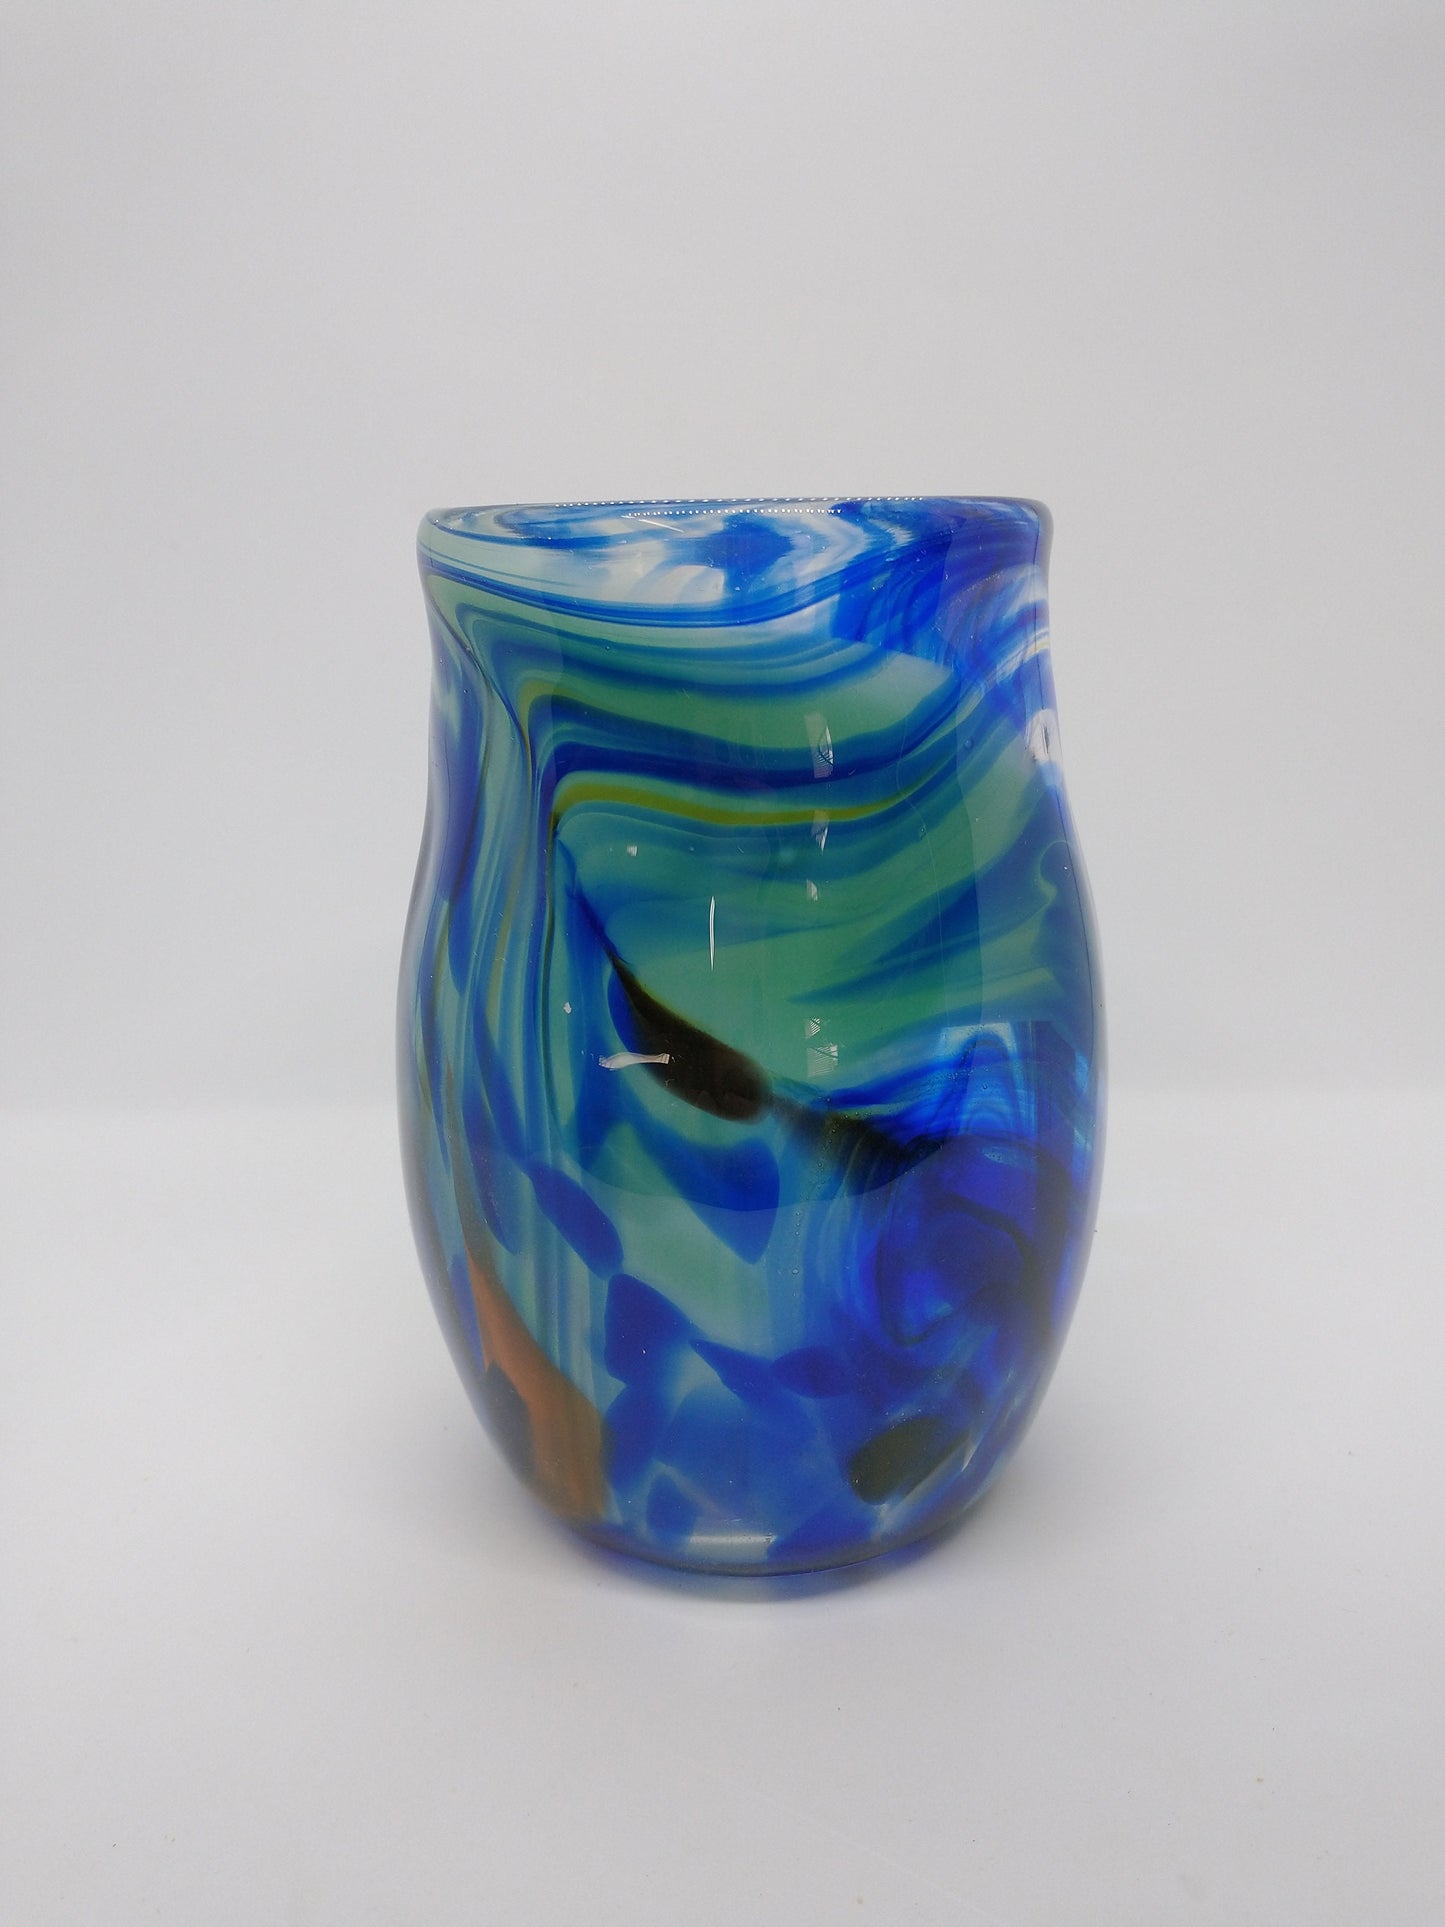 Blue Glass vase Small Glass Vase hand blown glass